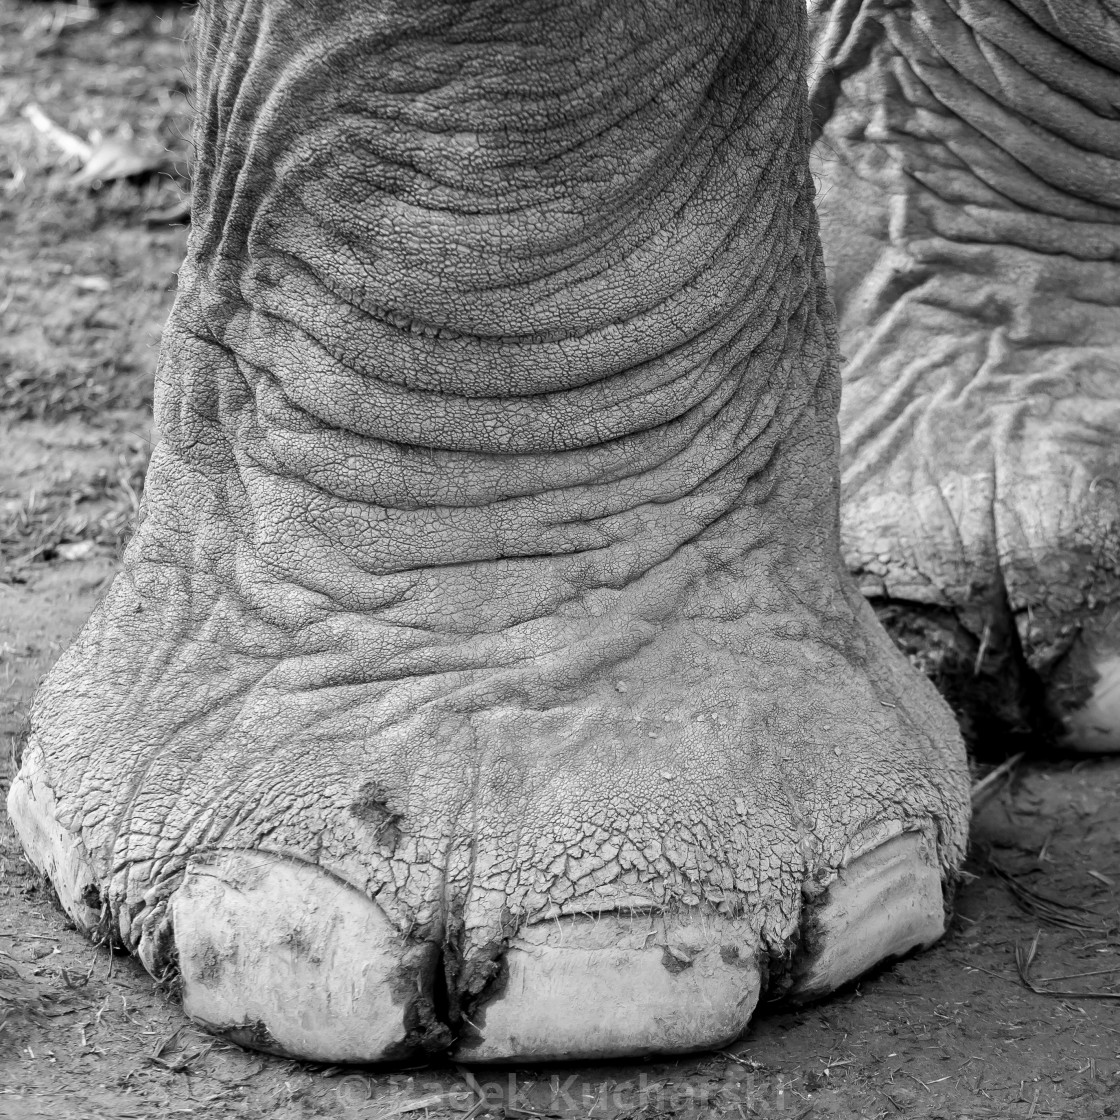 "Elephant's foot" stock image